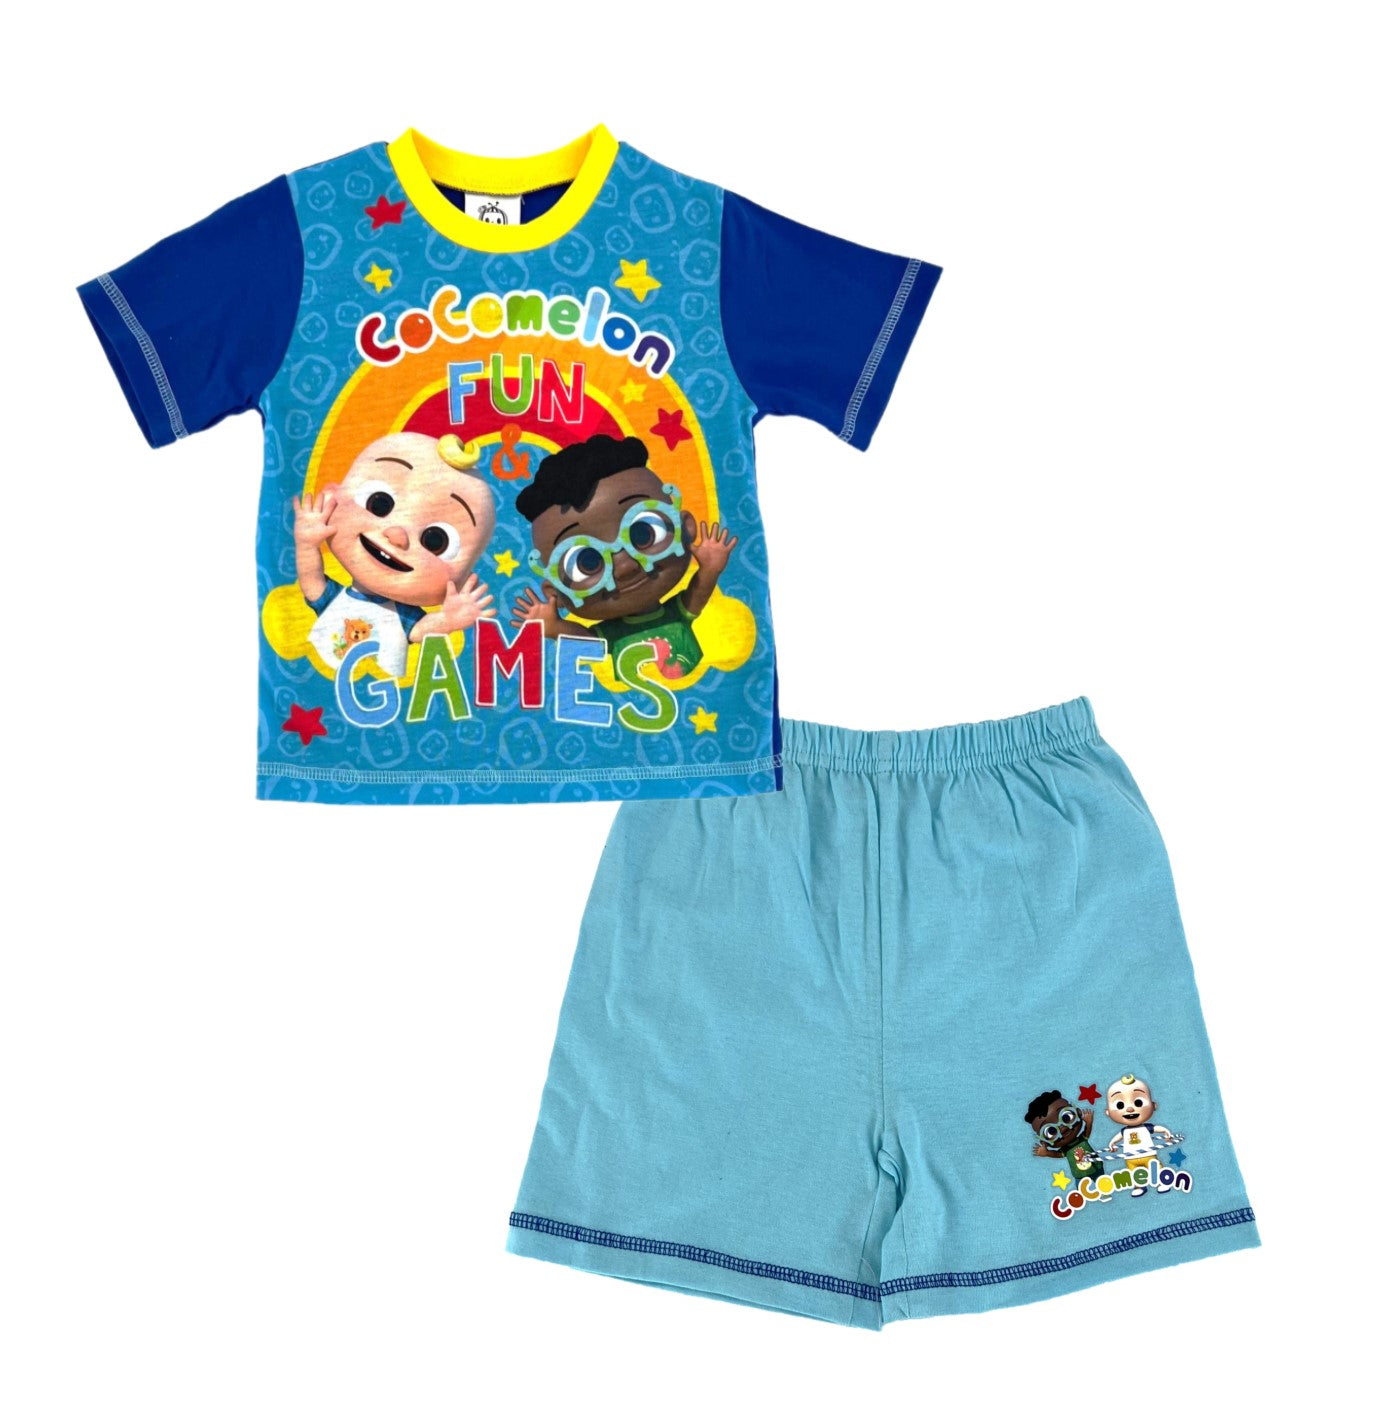 CoComelon Children’s Shortie Pyjamas ideal for Summer.